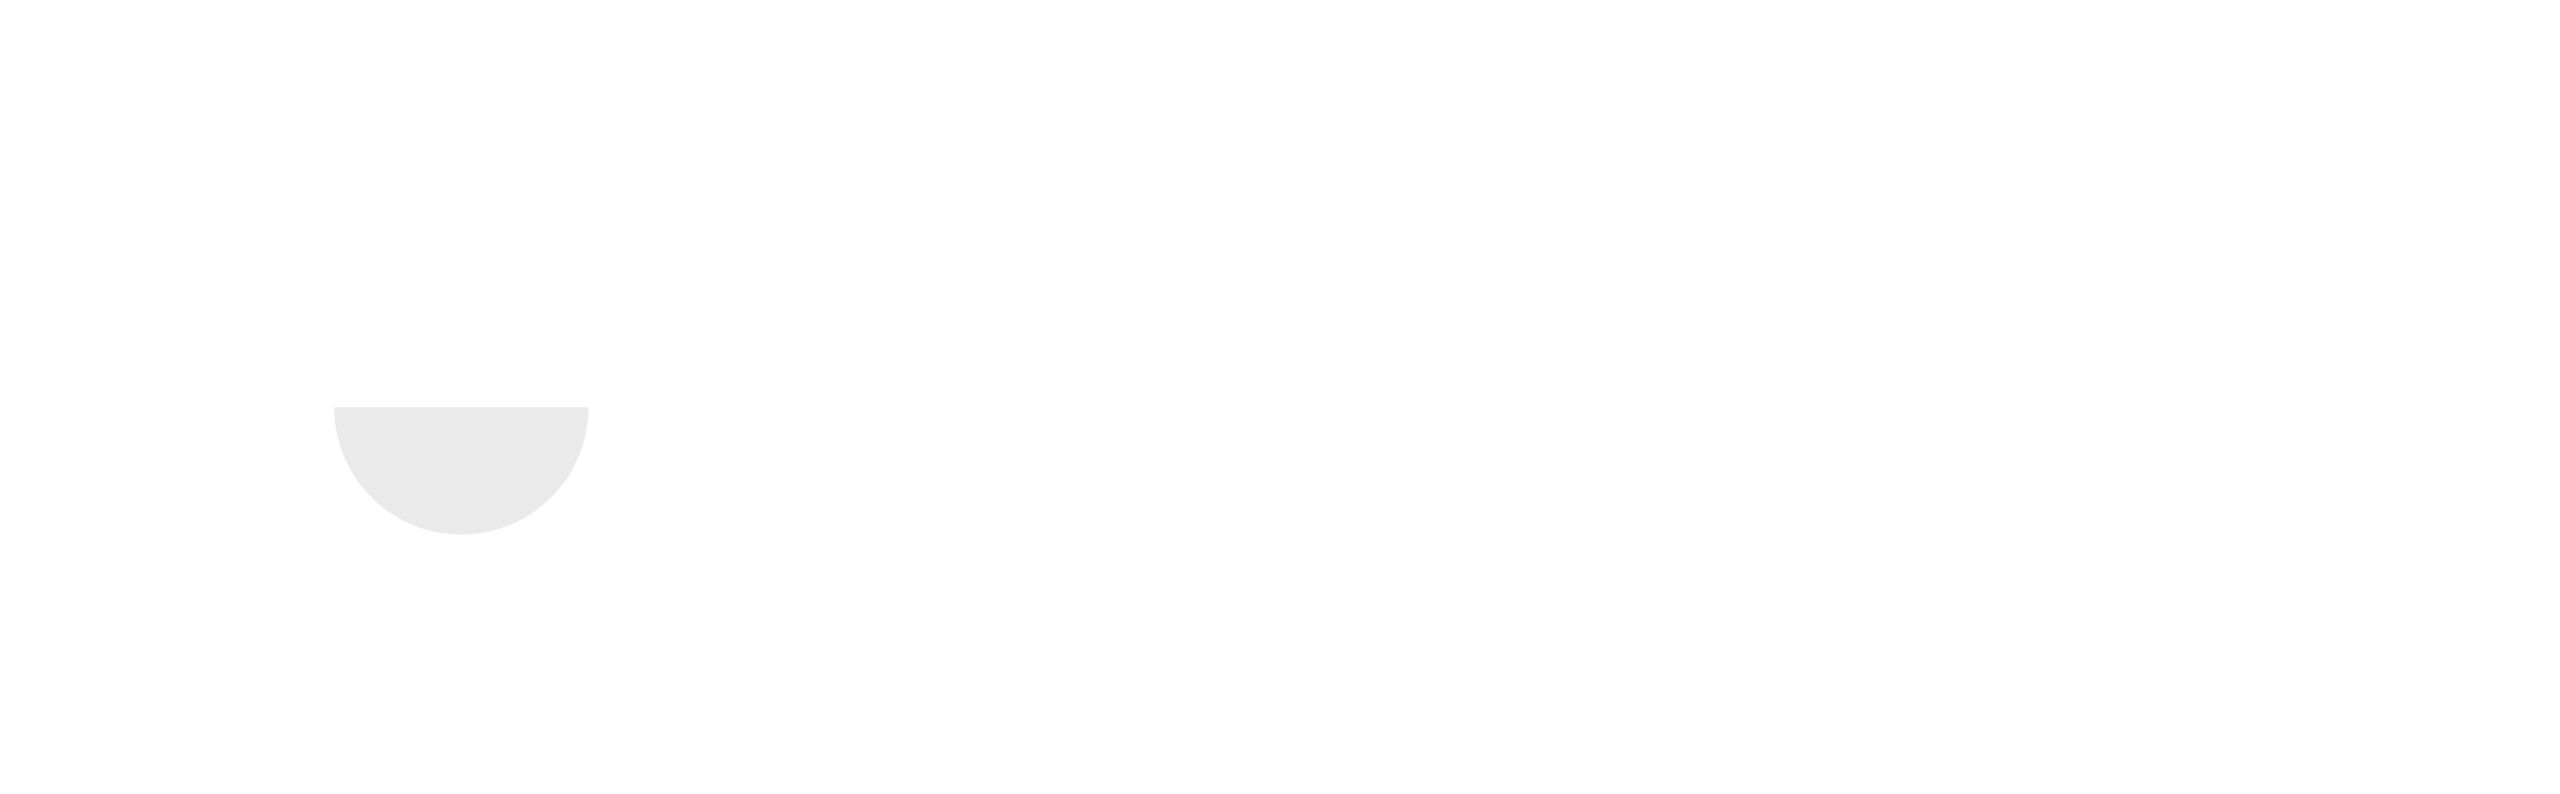 Charles Moll Photography